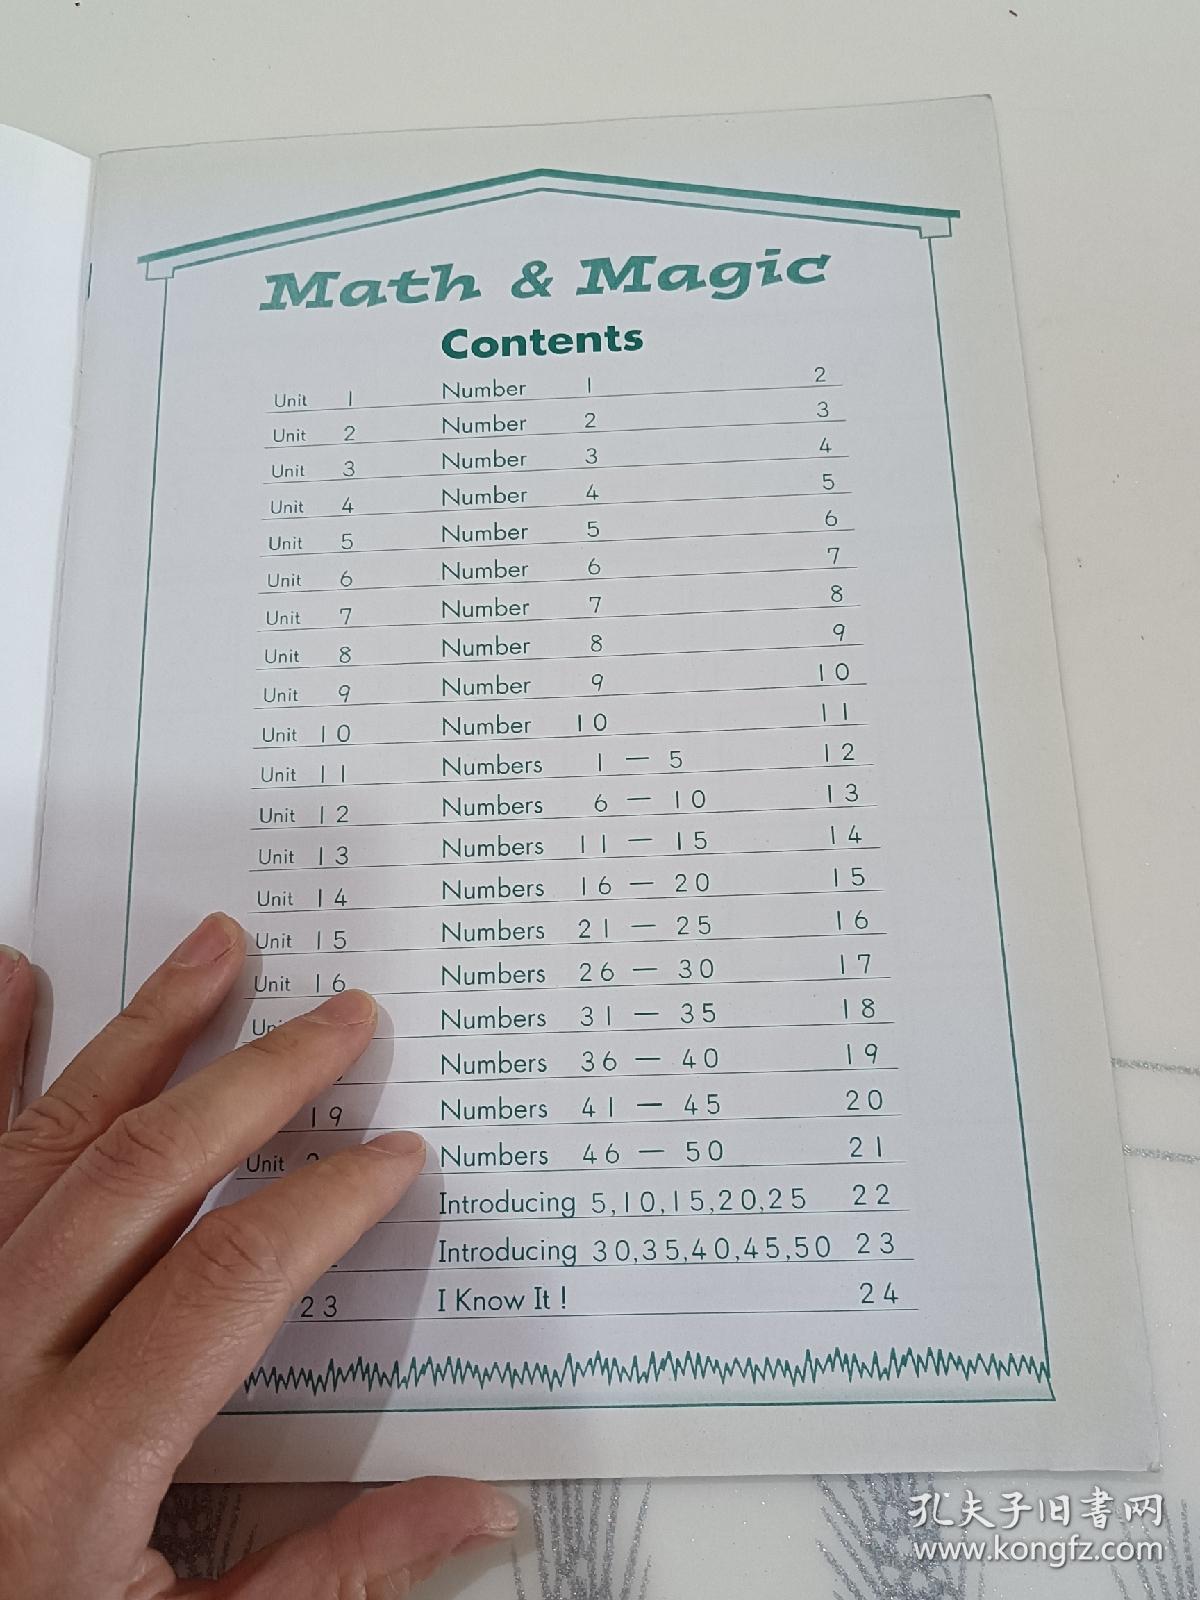 TOY IT & TOOL IT 5: Math & Magic ACTIVITY WORKBOOK玩玩做做5：数学和魔术活动练习册(LMEB28348)